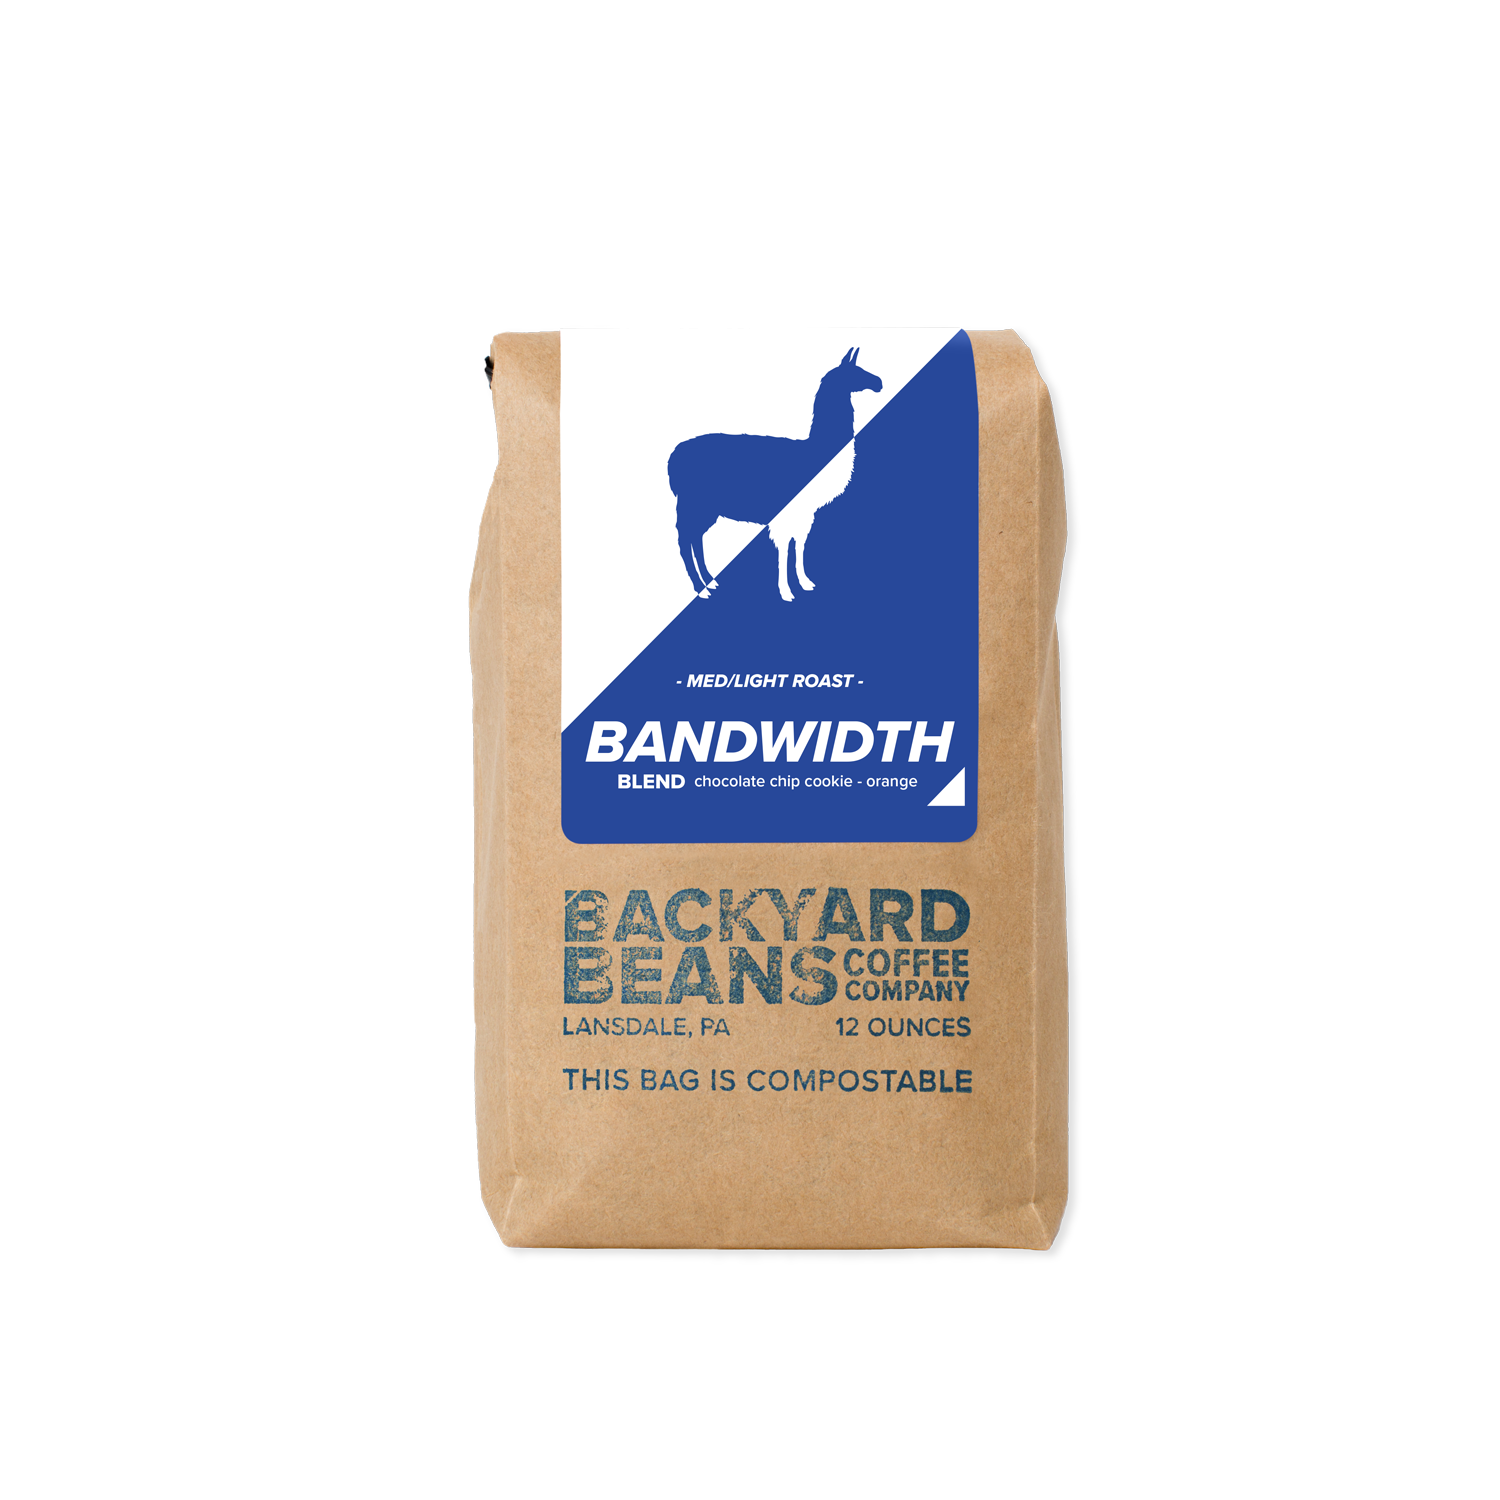 Bandwidth | Backyard Beans Coffee Co. | Dript Coffee Co.